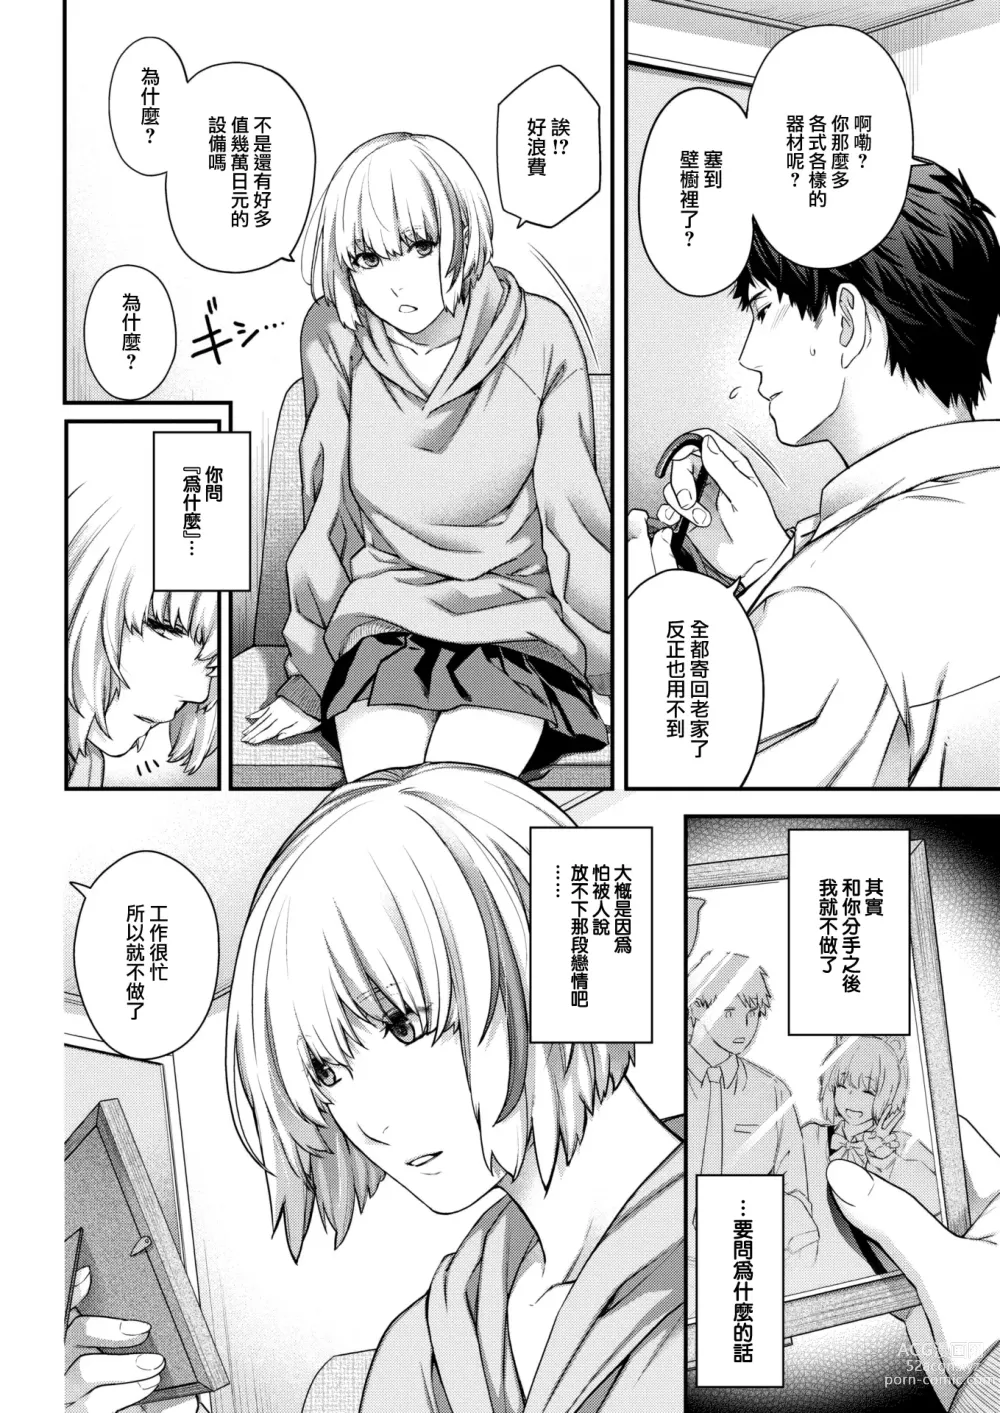 Page 7 of manga Sugao no Kikyou